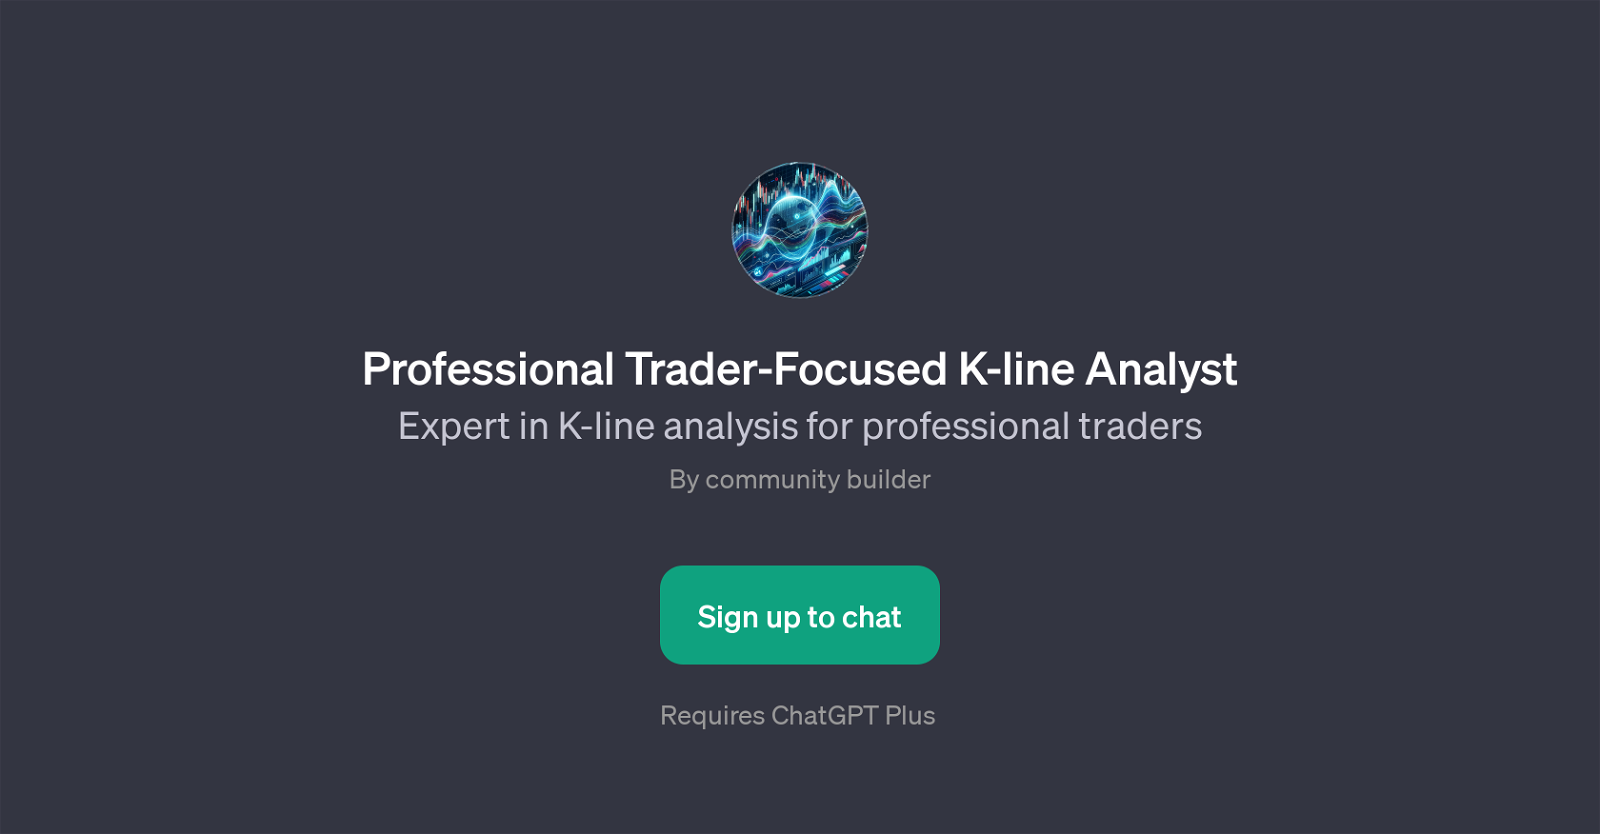 Professional Trader-Focused K-line Analyst website